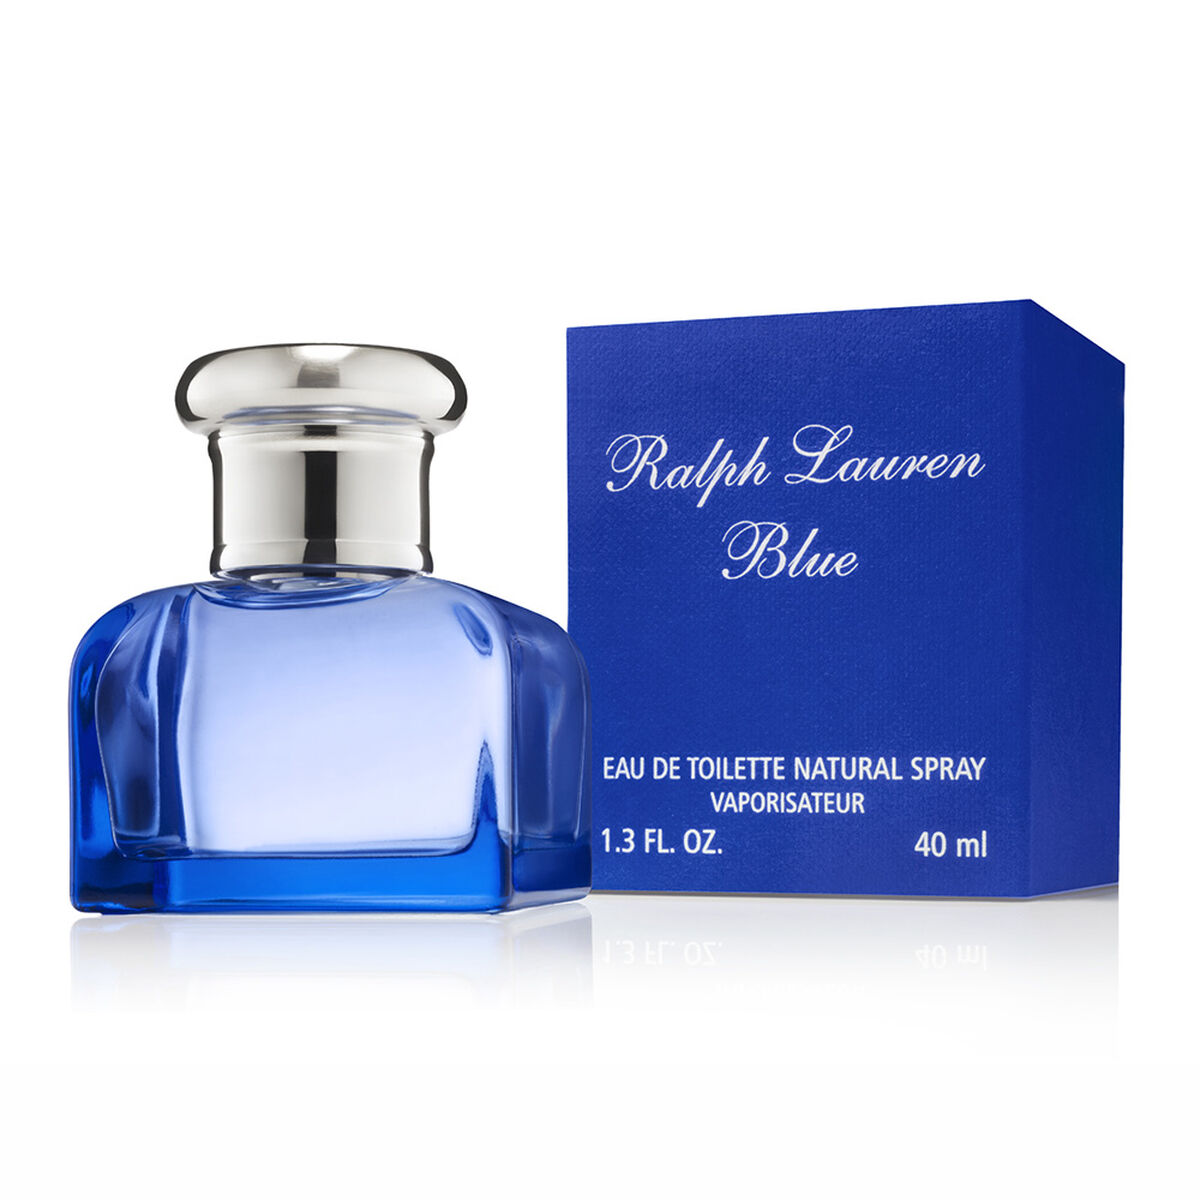 Perfume Blue EDT 40 ml